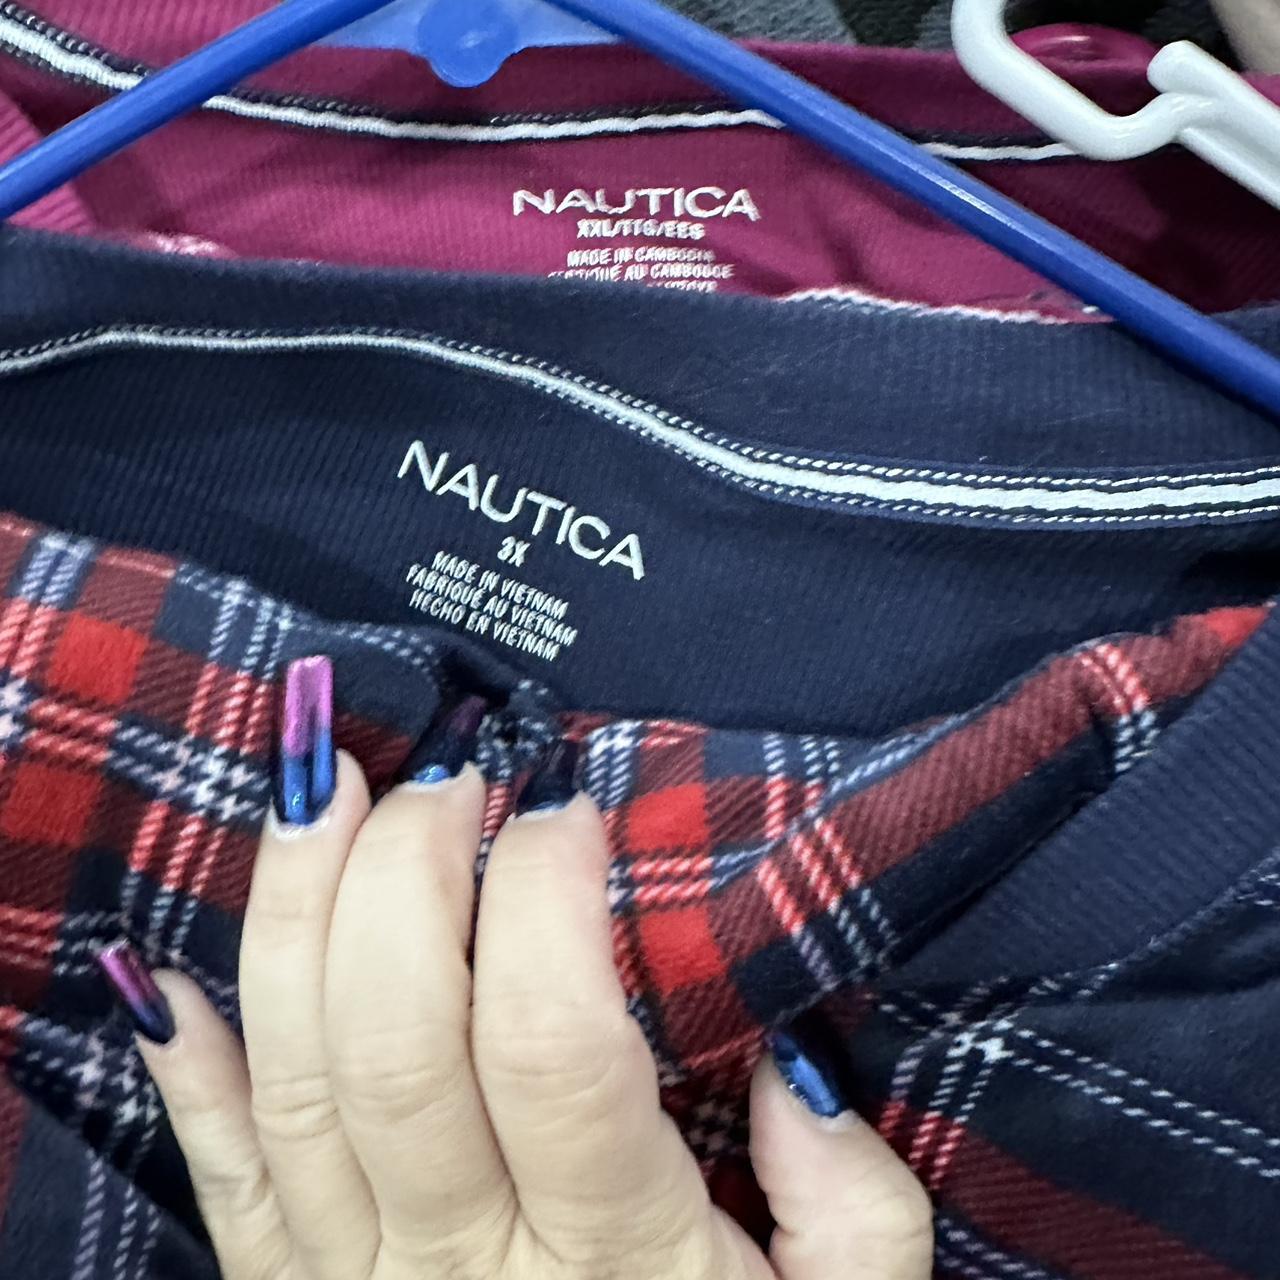 Nautica pajama set Soft and very warm - Depop